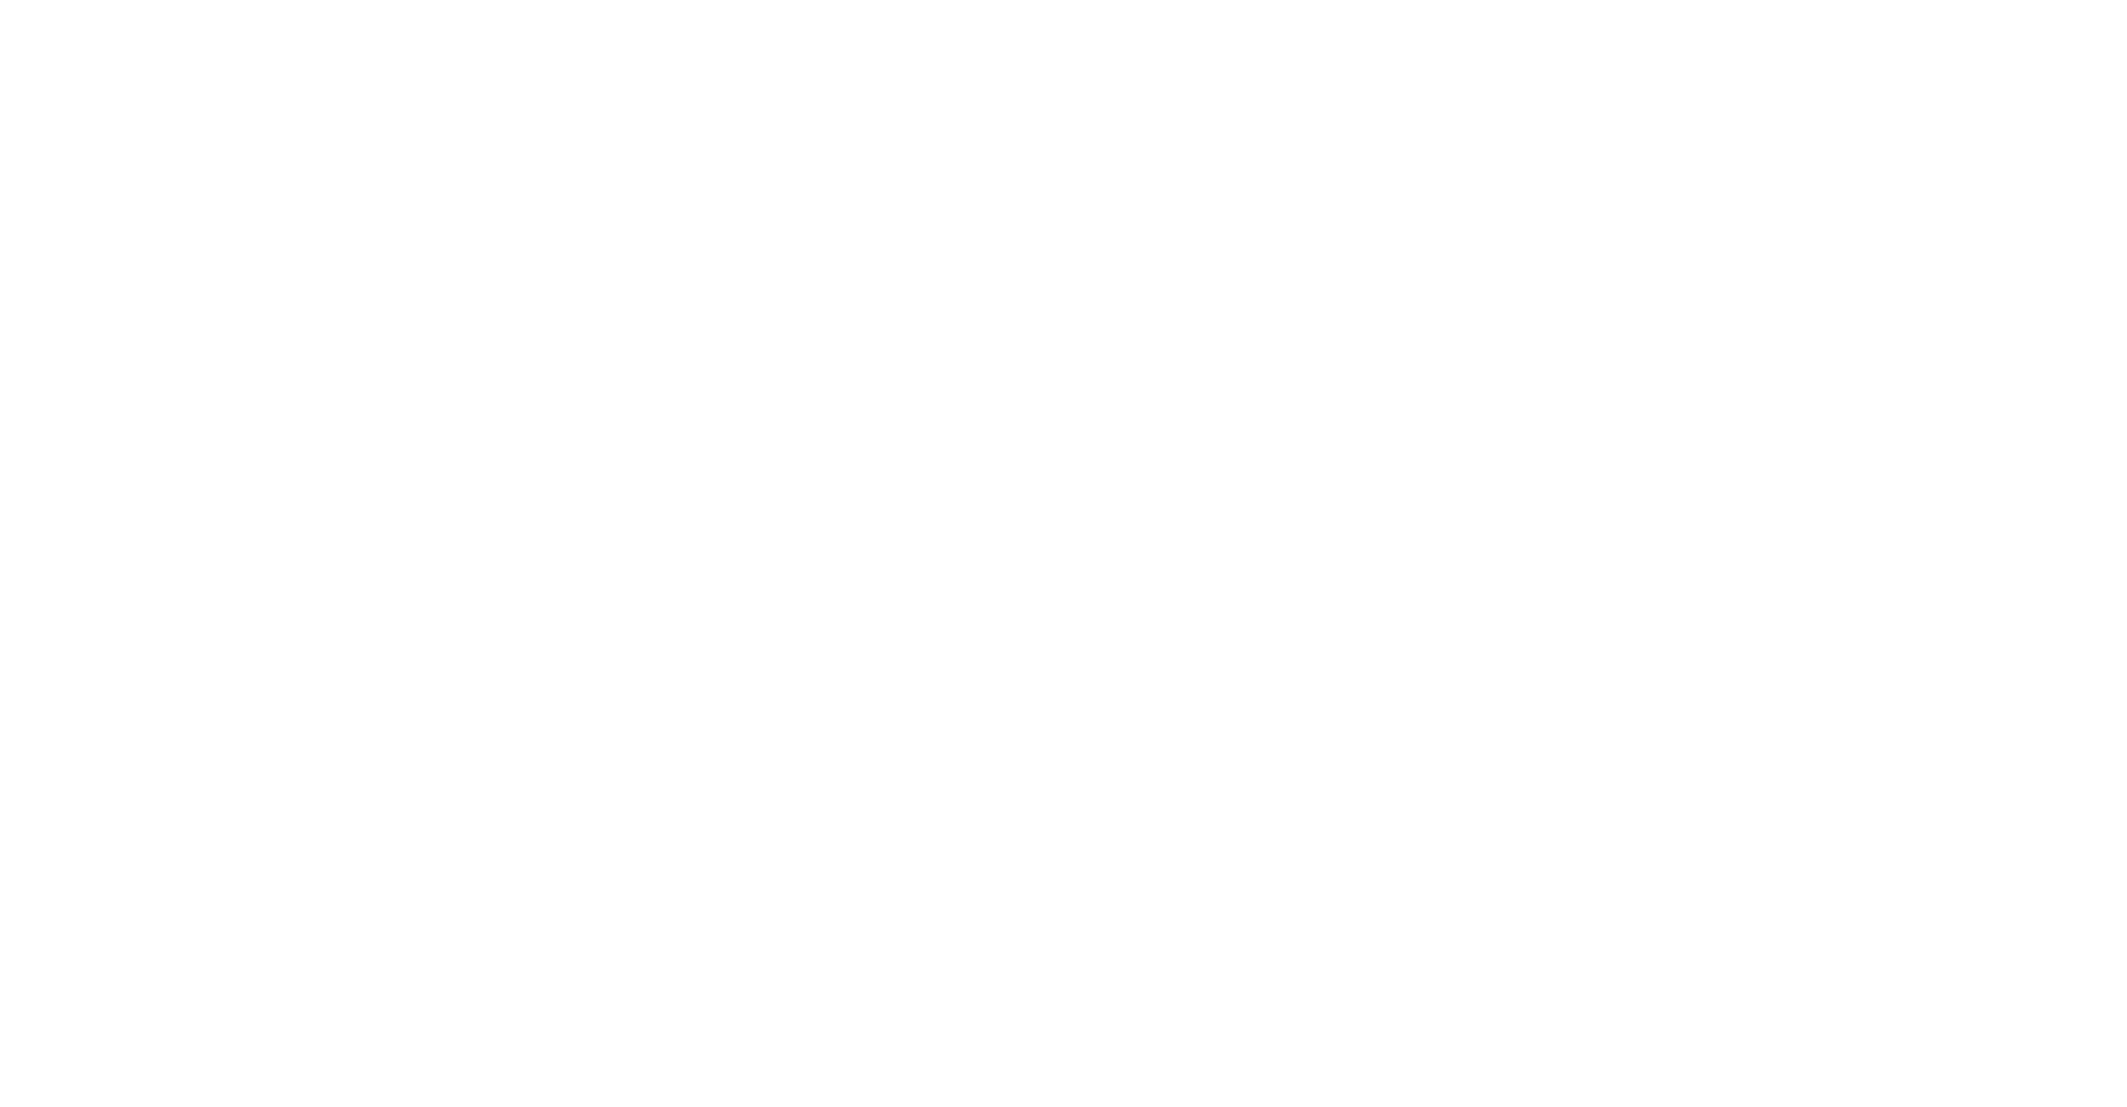 Engelberg Mountain Guide